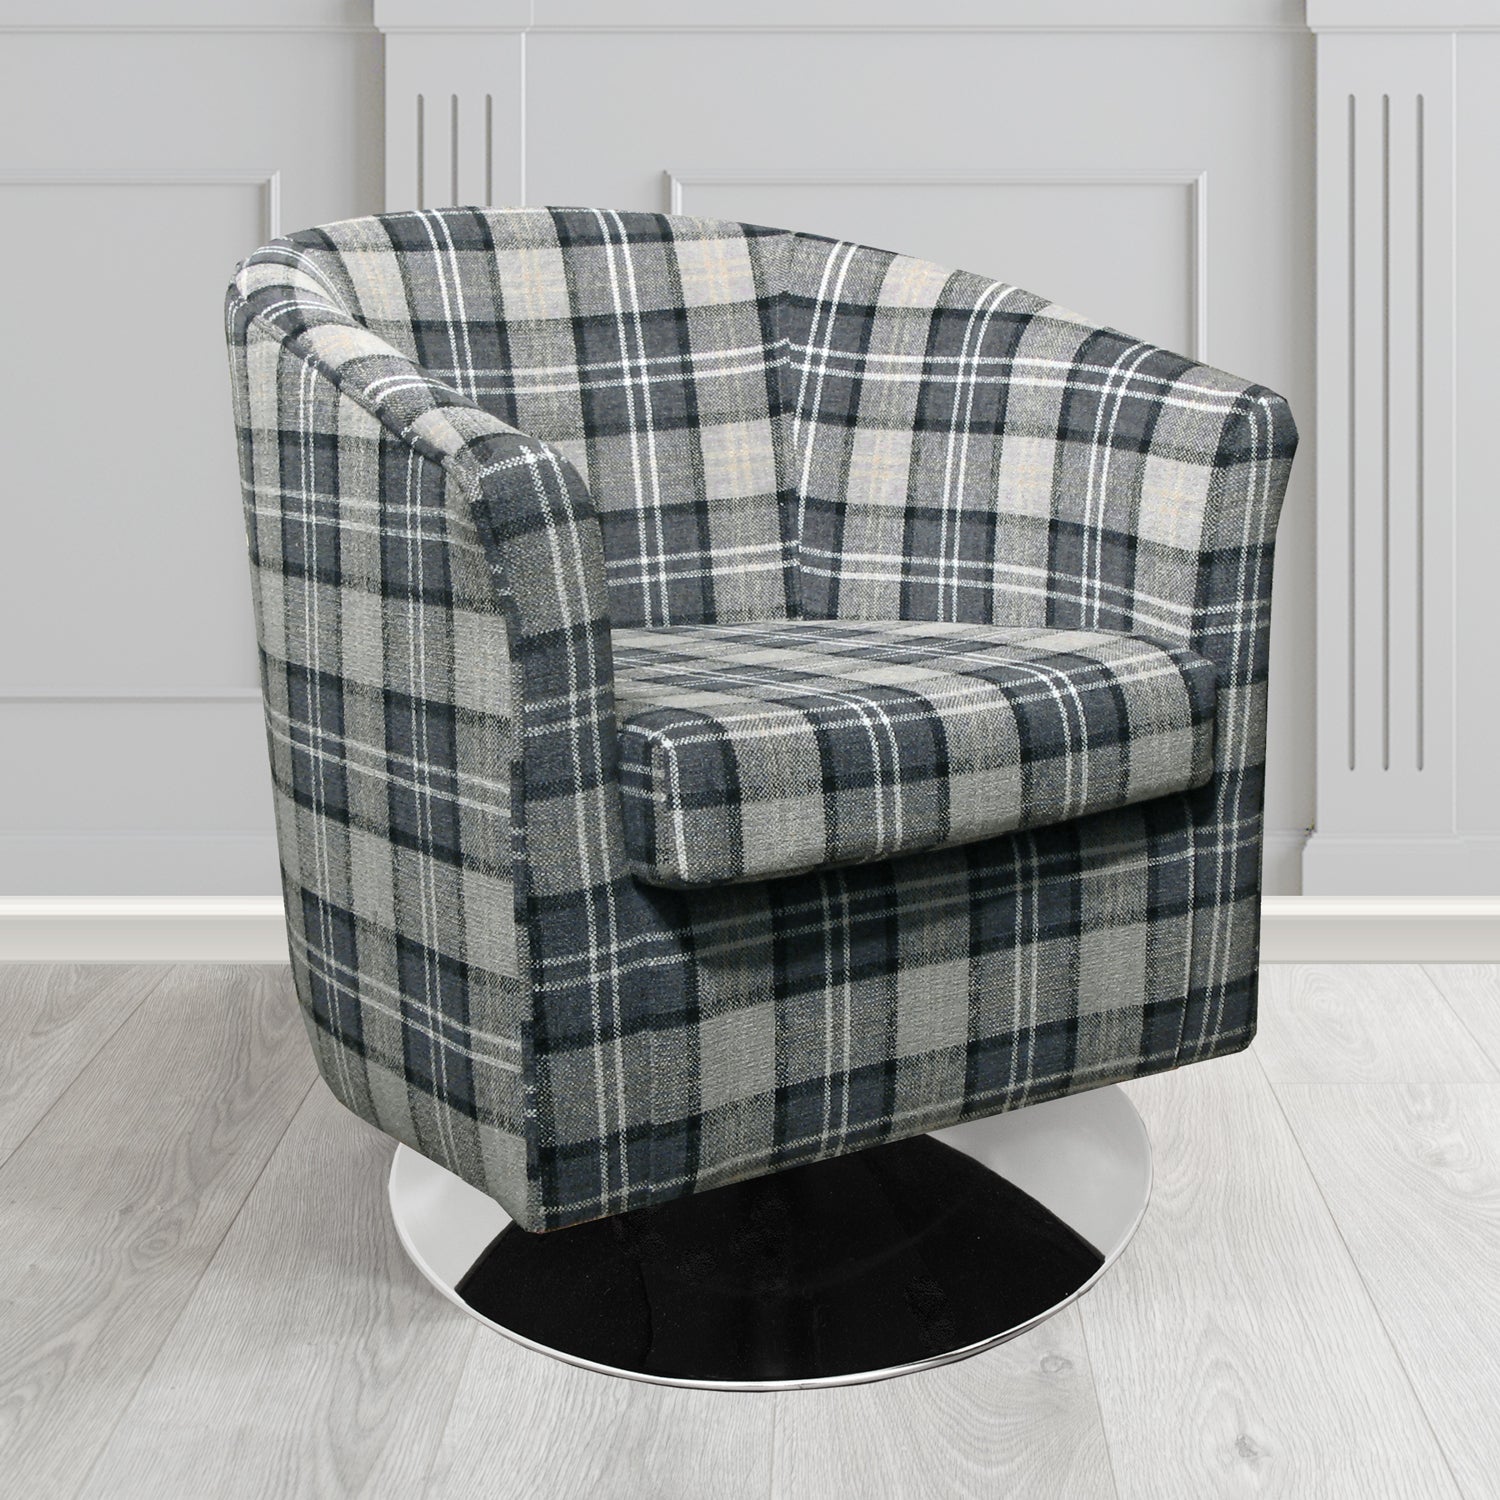 Tuscany Swivel Tub Chair in Lana Granite Tartan LAN1260 Crib 5 Fabric - The Tub Chair Shop